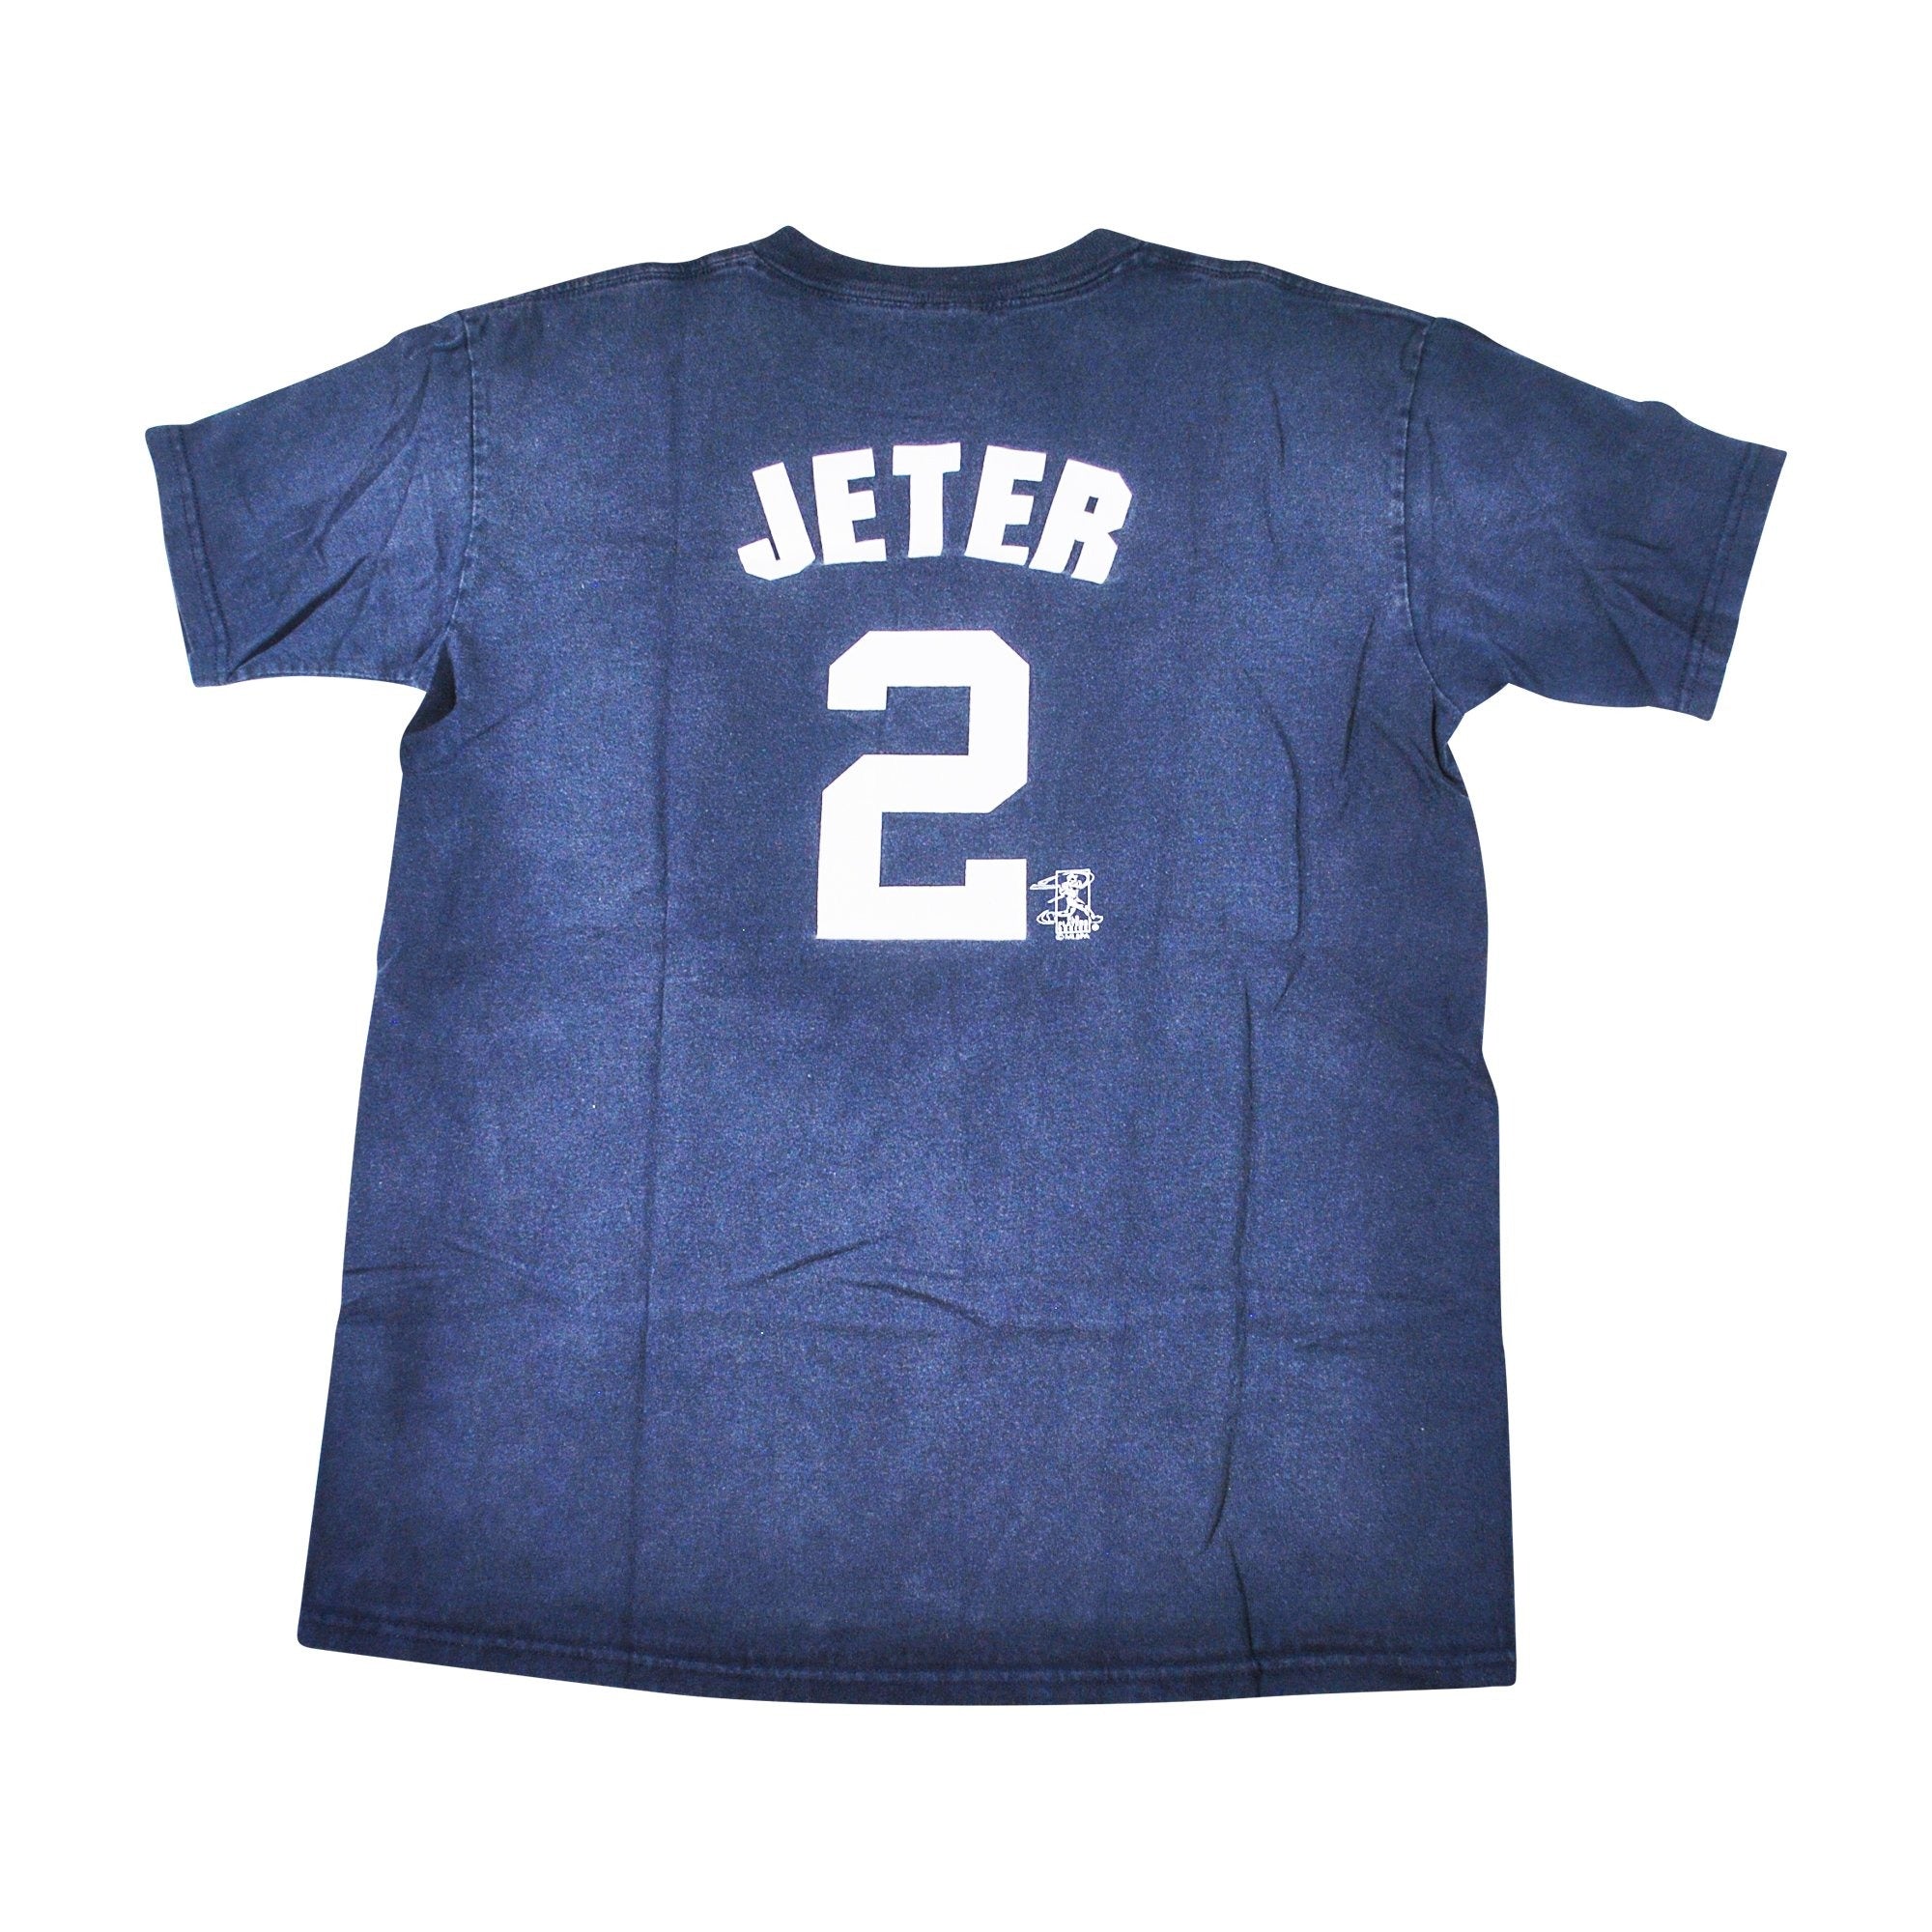 VTG 1997 Pro Player Derek Jeter Shirt Youth Size 14/16 Large New York  Yankees